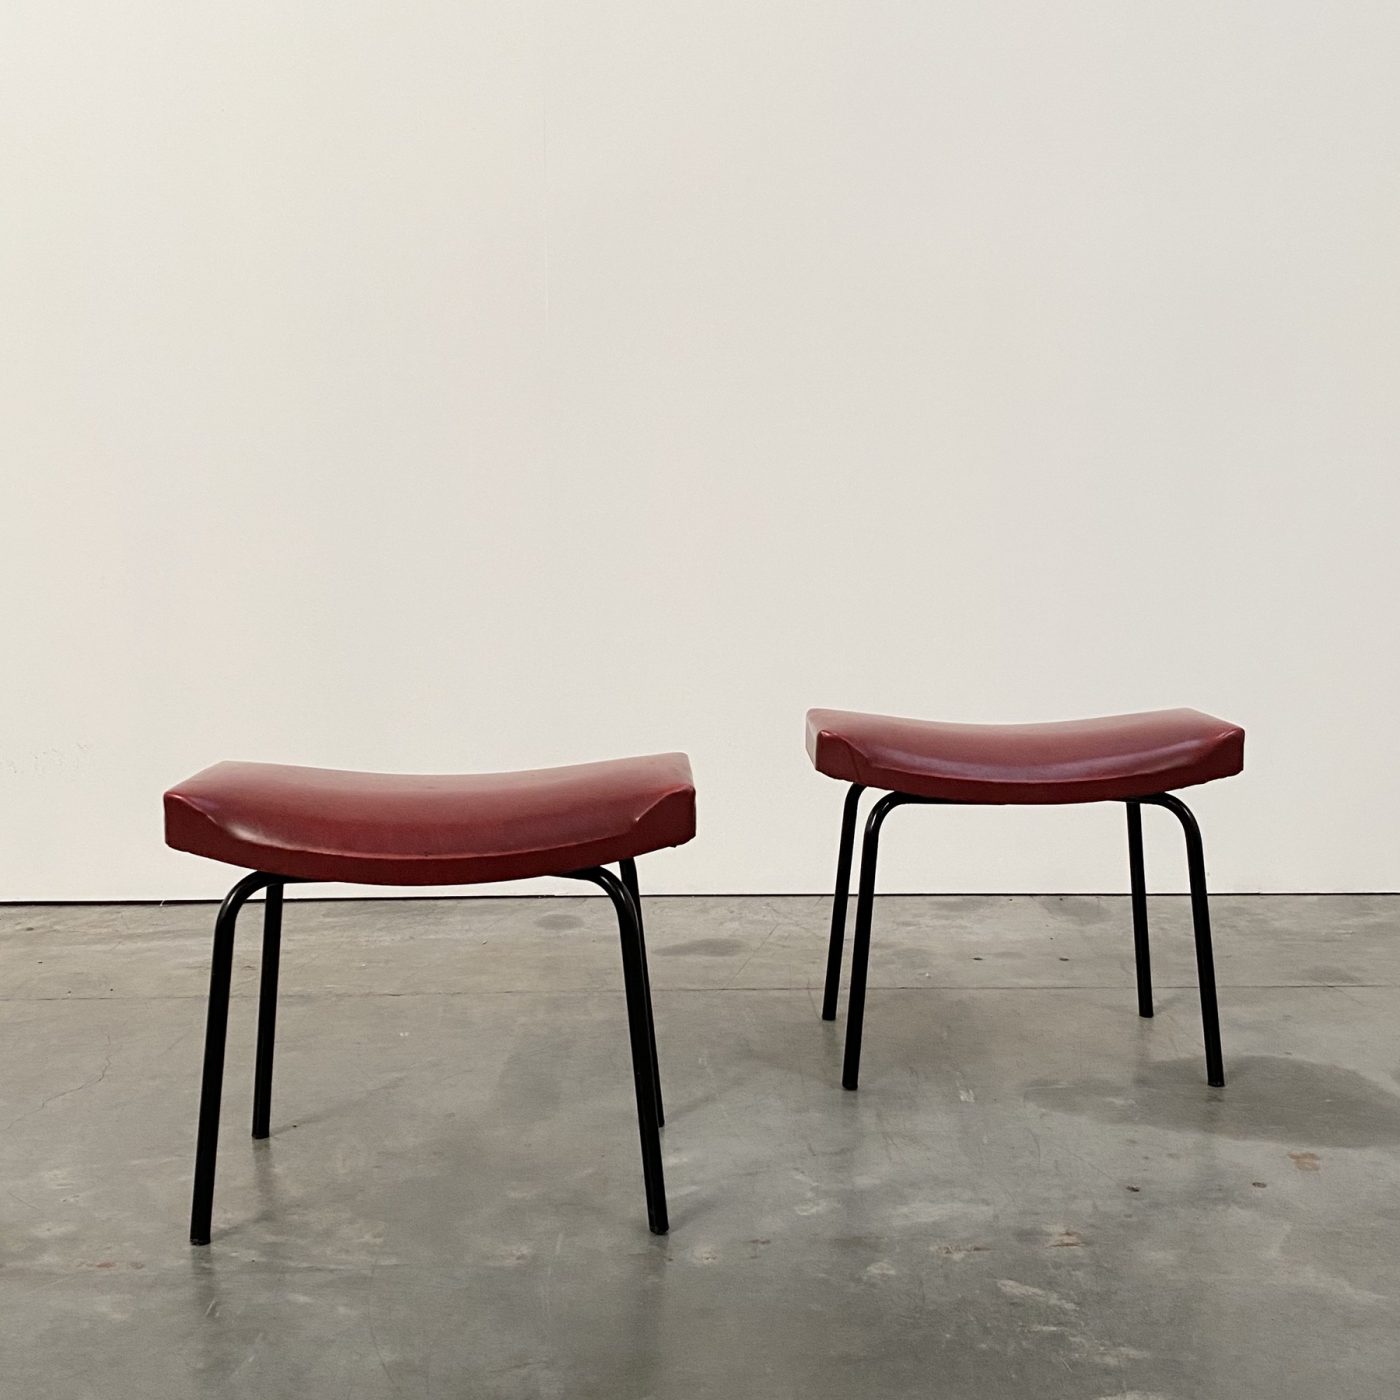 objet-vagabond-midcentury-chairs0010